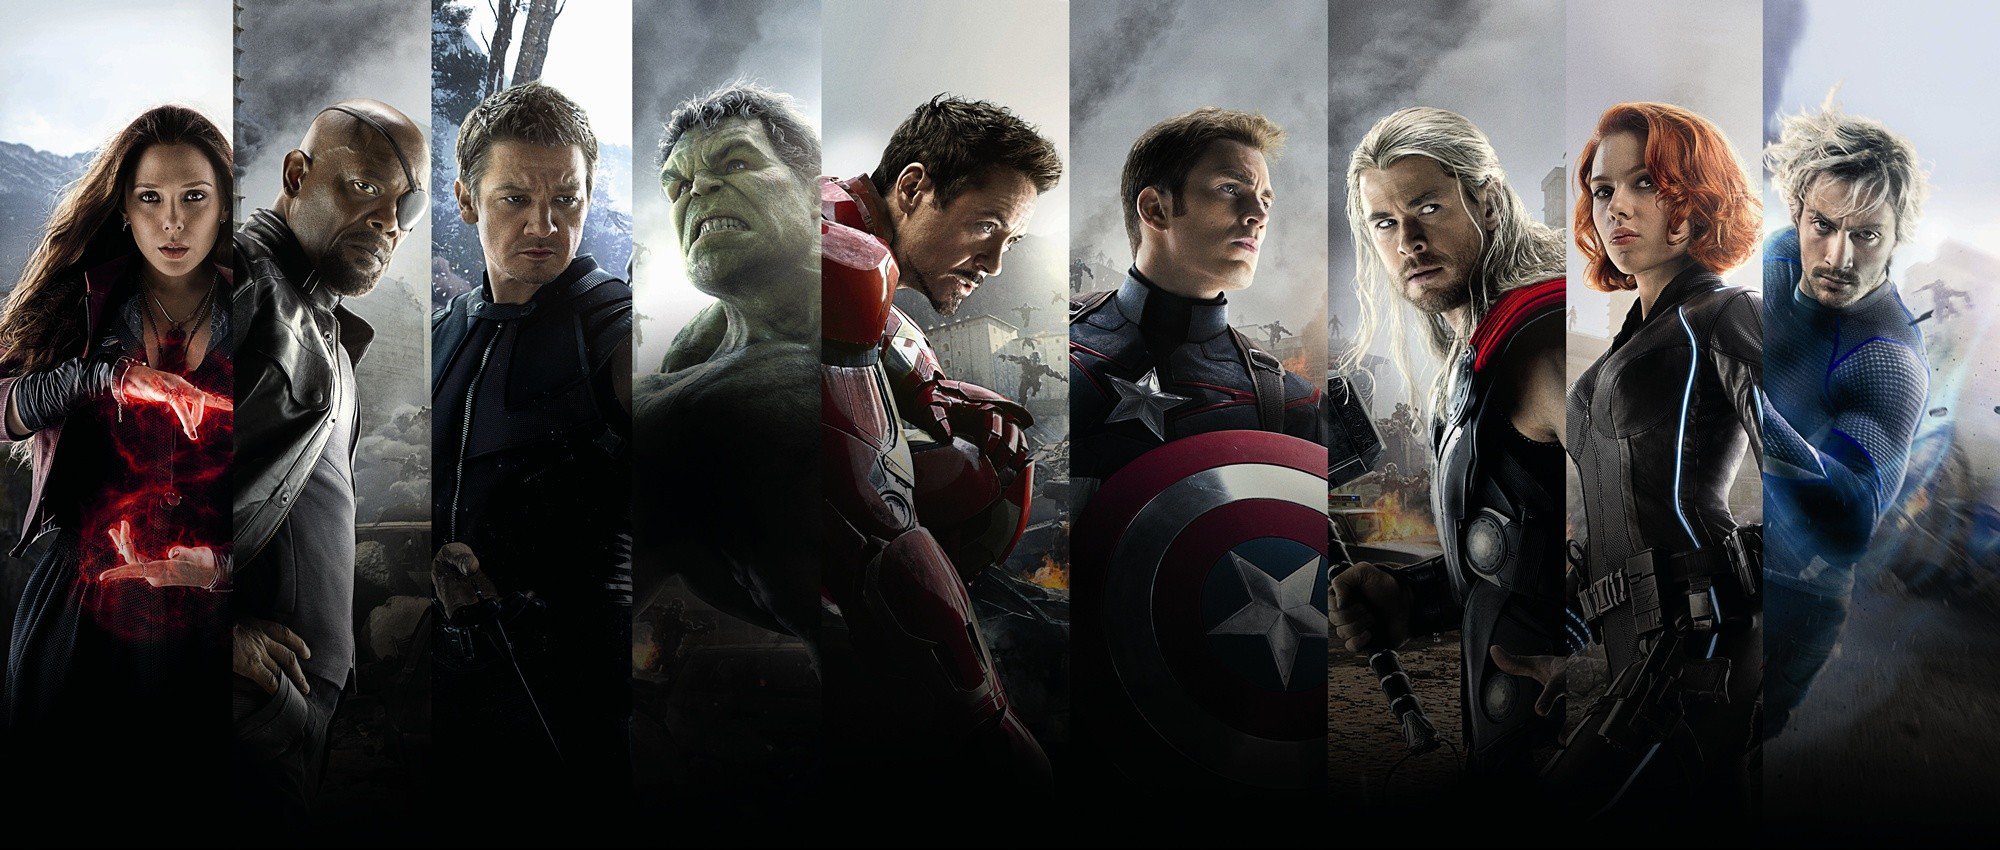 Jeremy Renner, Robert Downey Jr., Chris Evans, Chris Hemsworth, Scarlett Johansson and Aaron Johnson in Walt Disney Pictures' Avengers: Age of Ultron (2015)